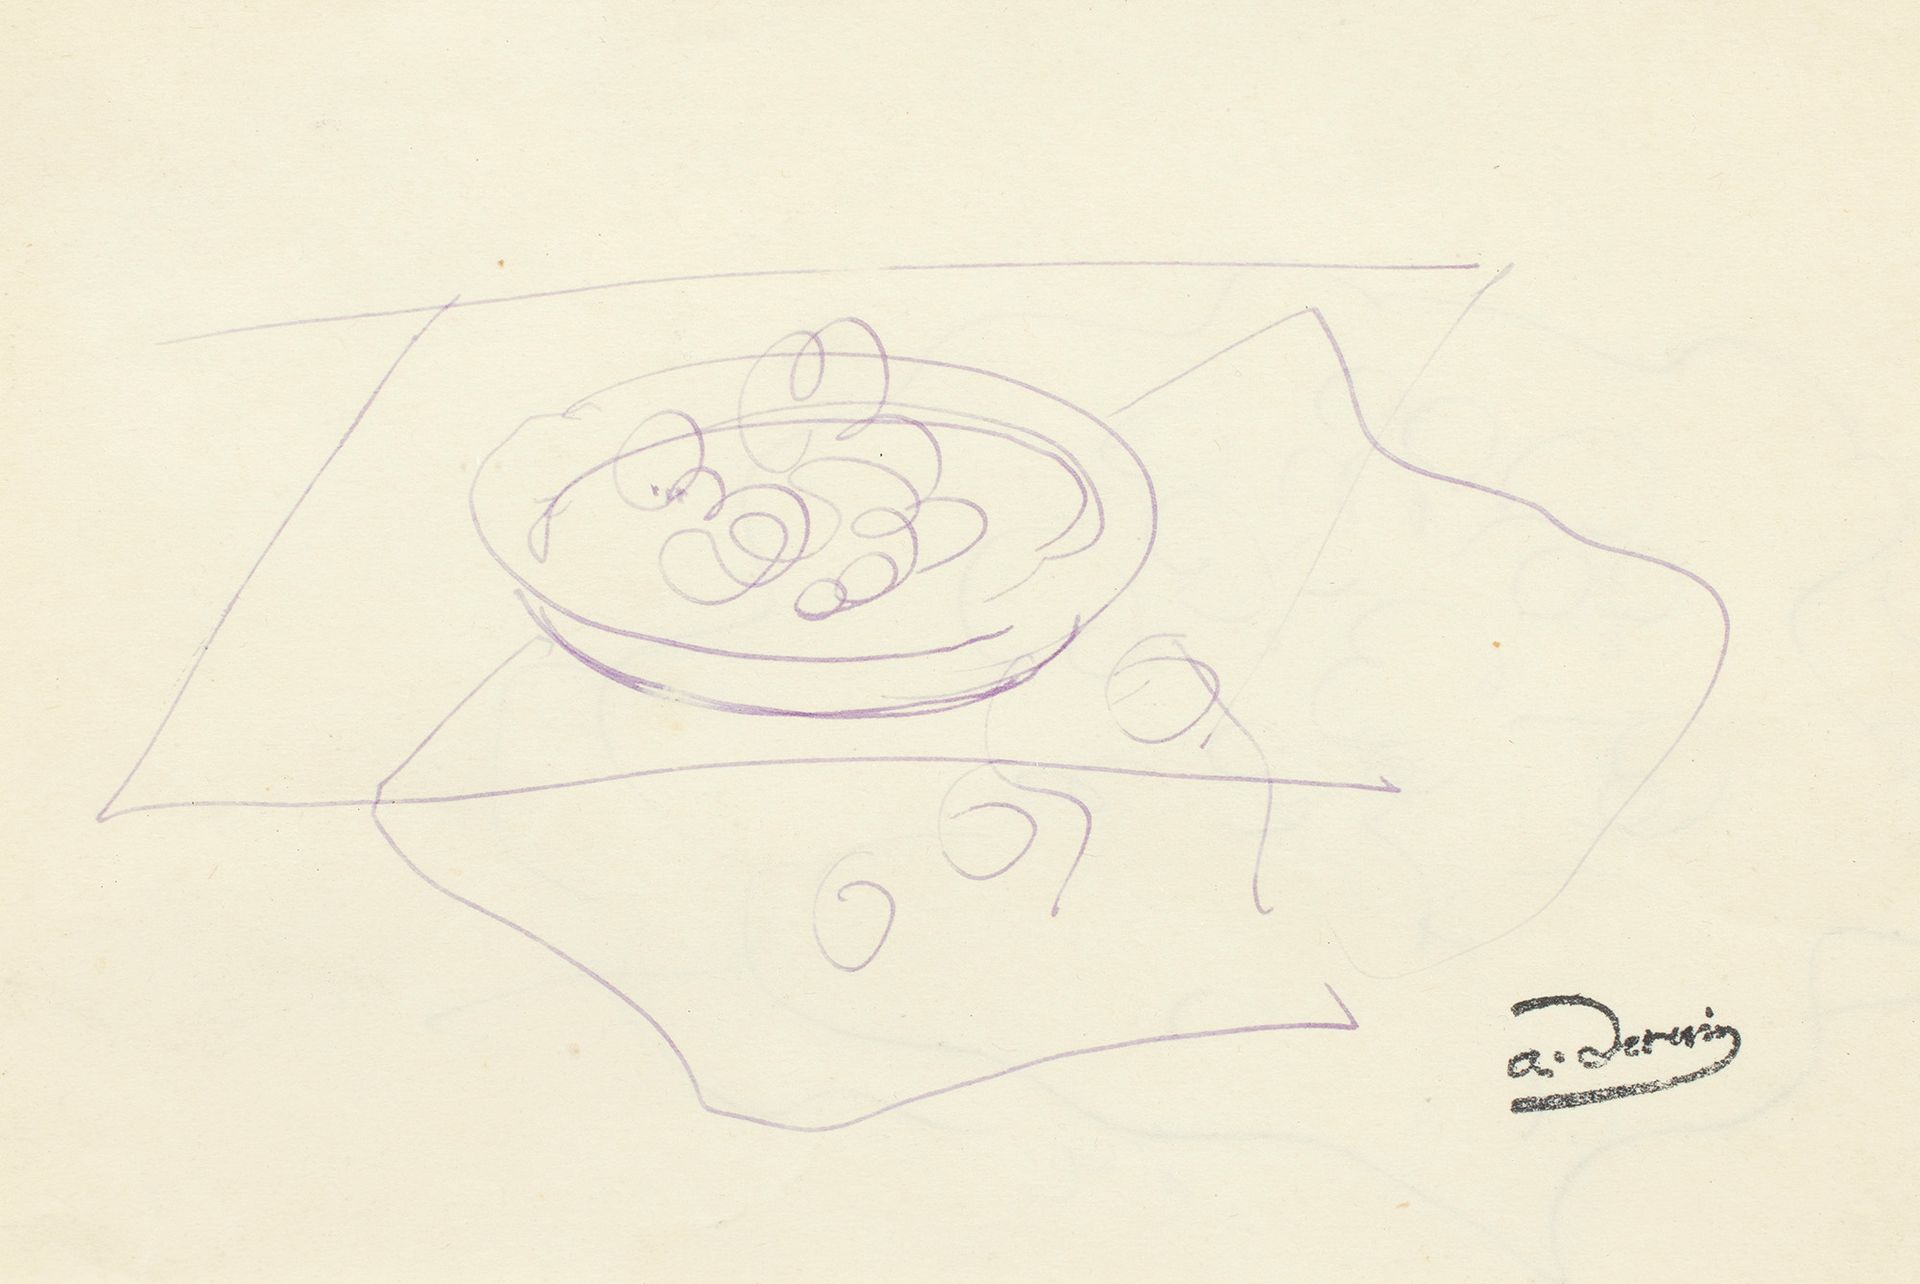 André DERAIN (1880-1954) 安德烈-德兰 (1880-1954)
静物与水果。
紫色墨水画，签名印在右下方。
11 x 16 cm
(点蚀&hellip;